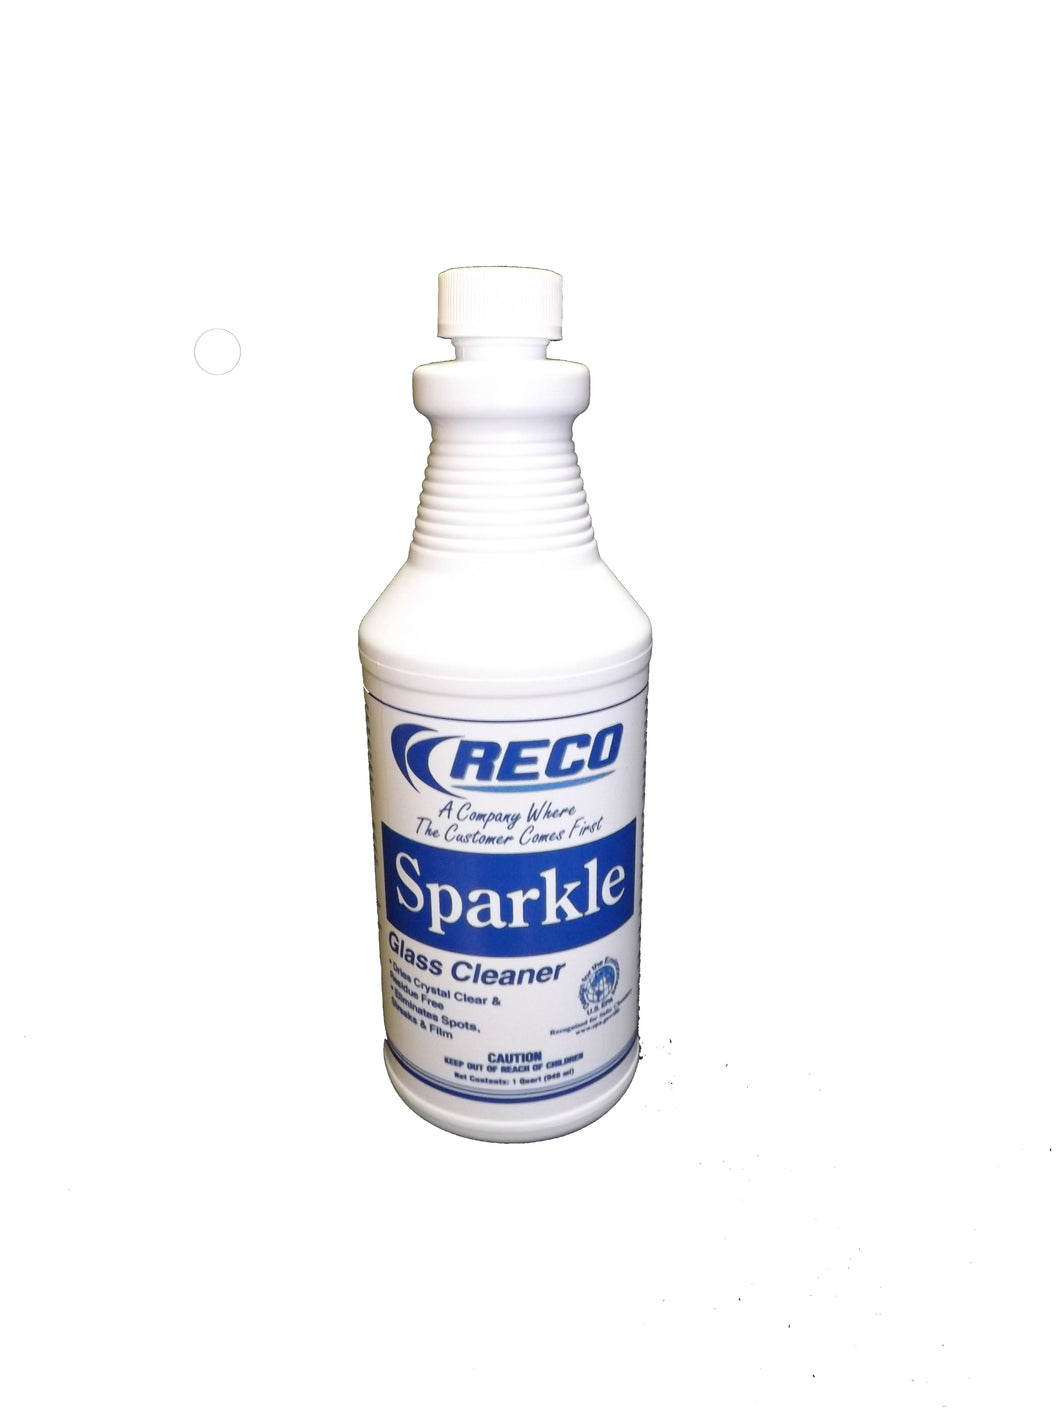 RECO SPARKLE MIRROR & GLASS CLEANER- QUART